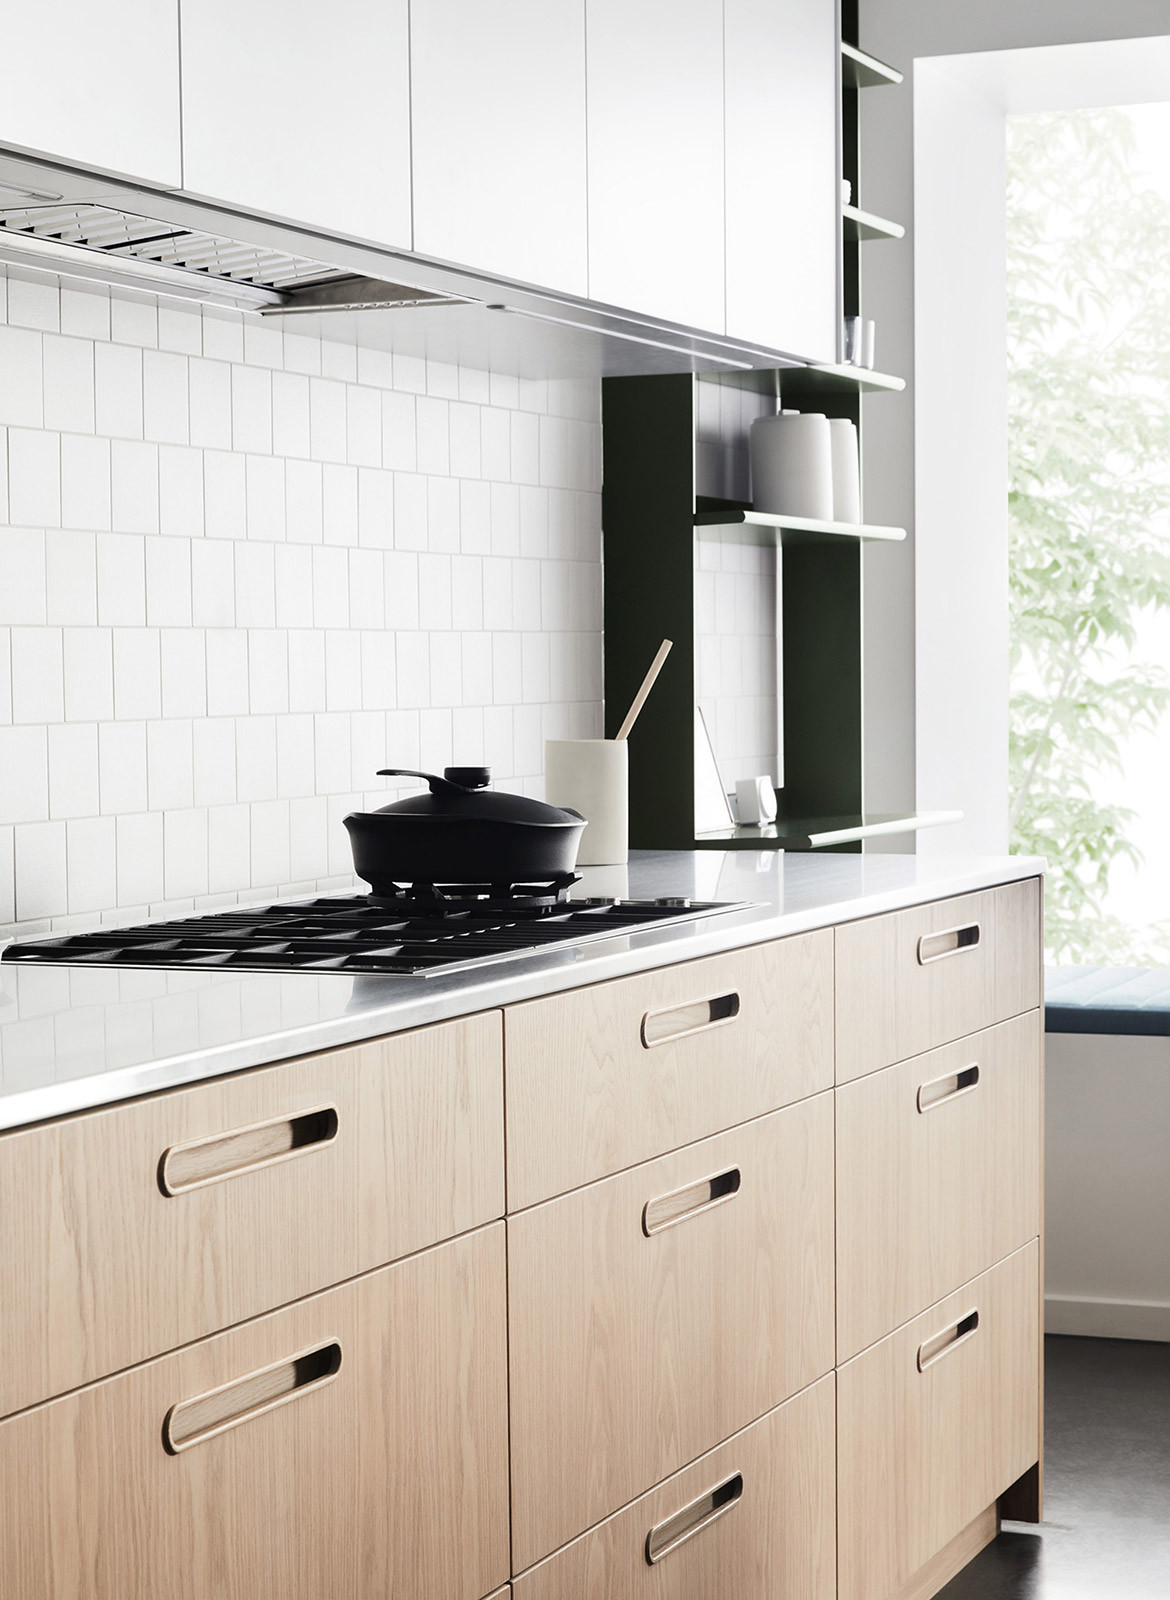 Tableau Kitchen System Cantilever DesignOffice